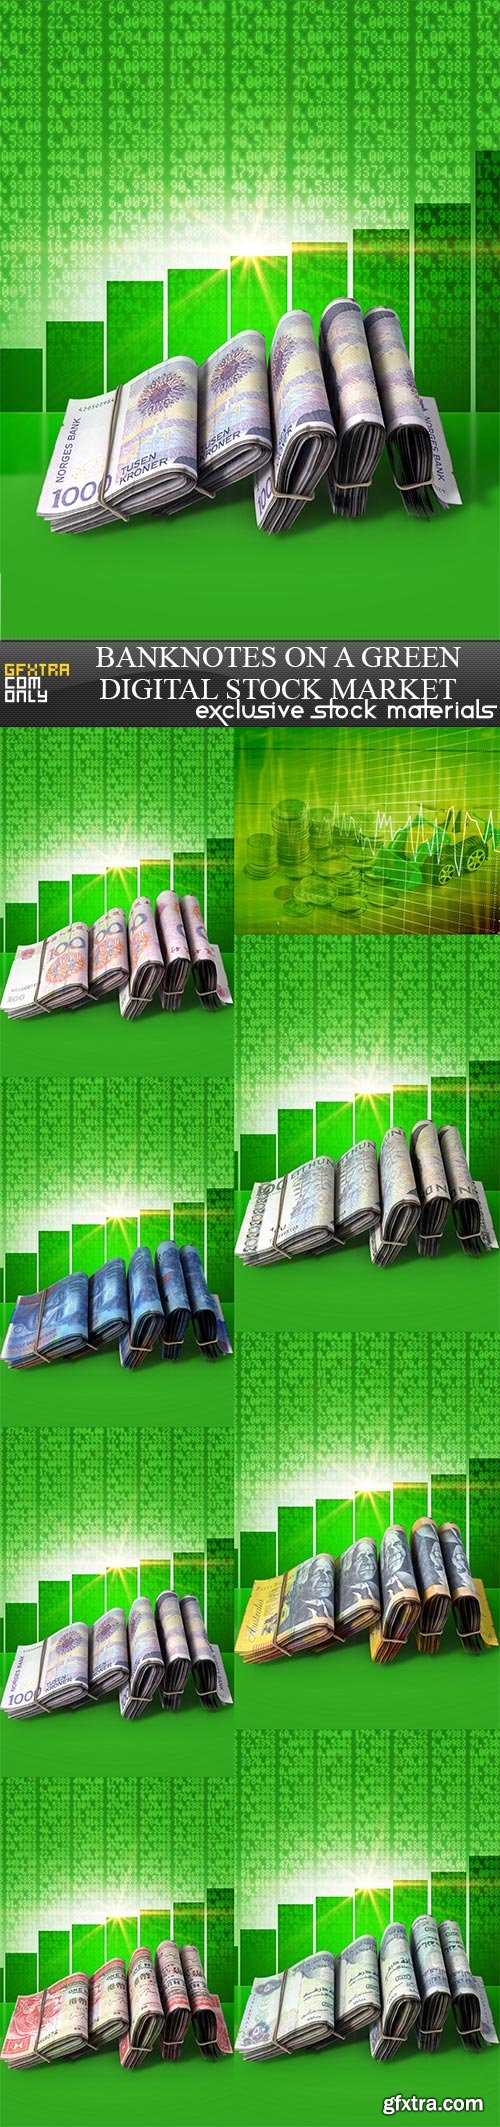 Banknotes on a green digital stock market, 8 x UHQ JPEG